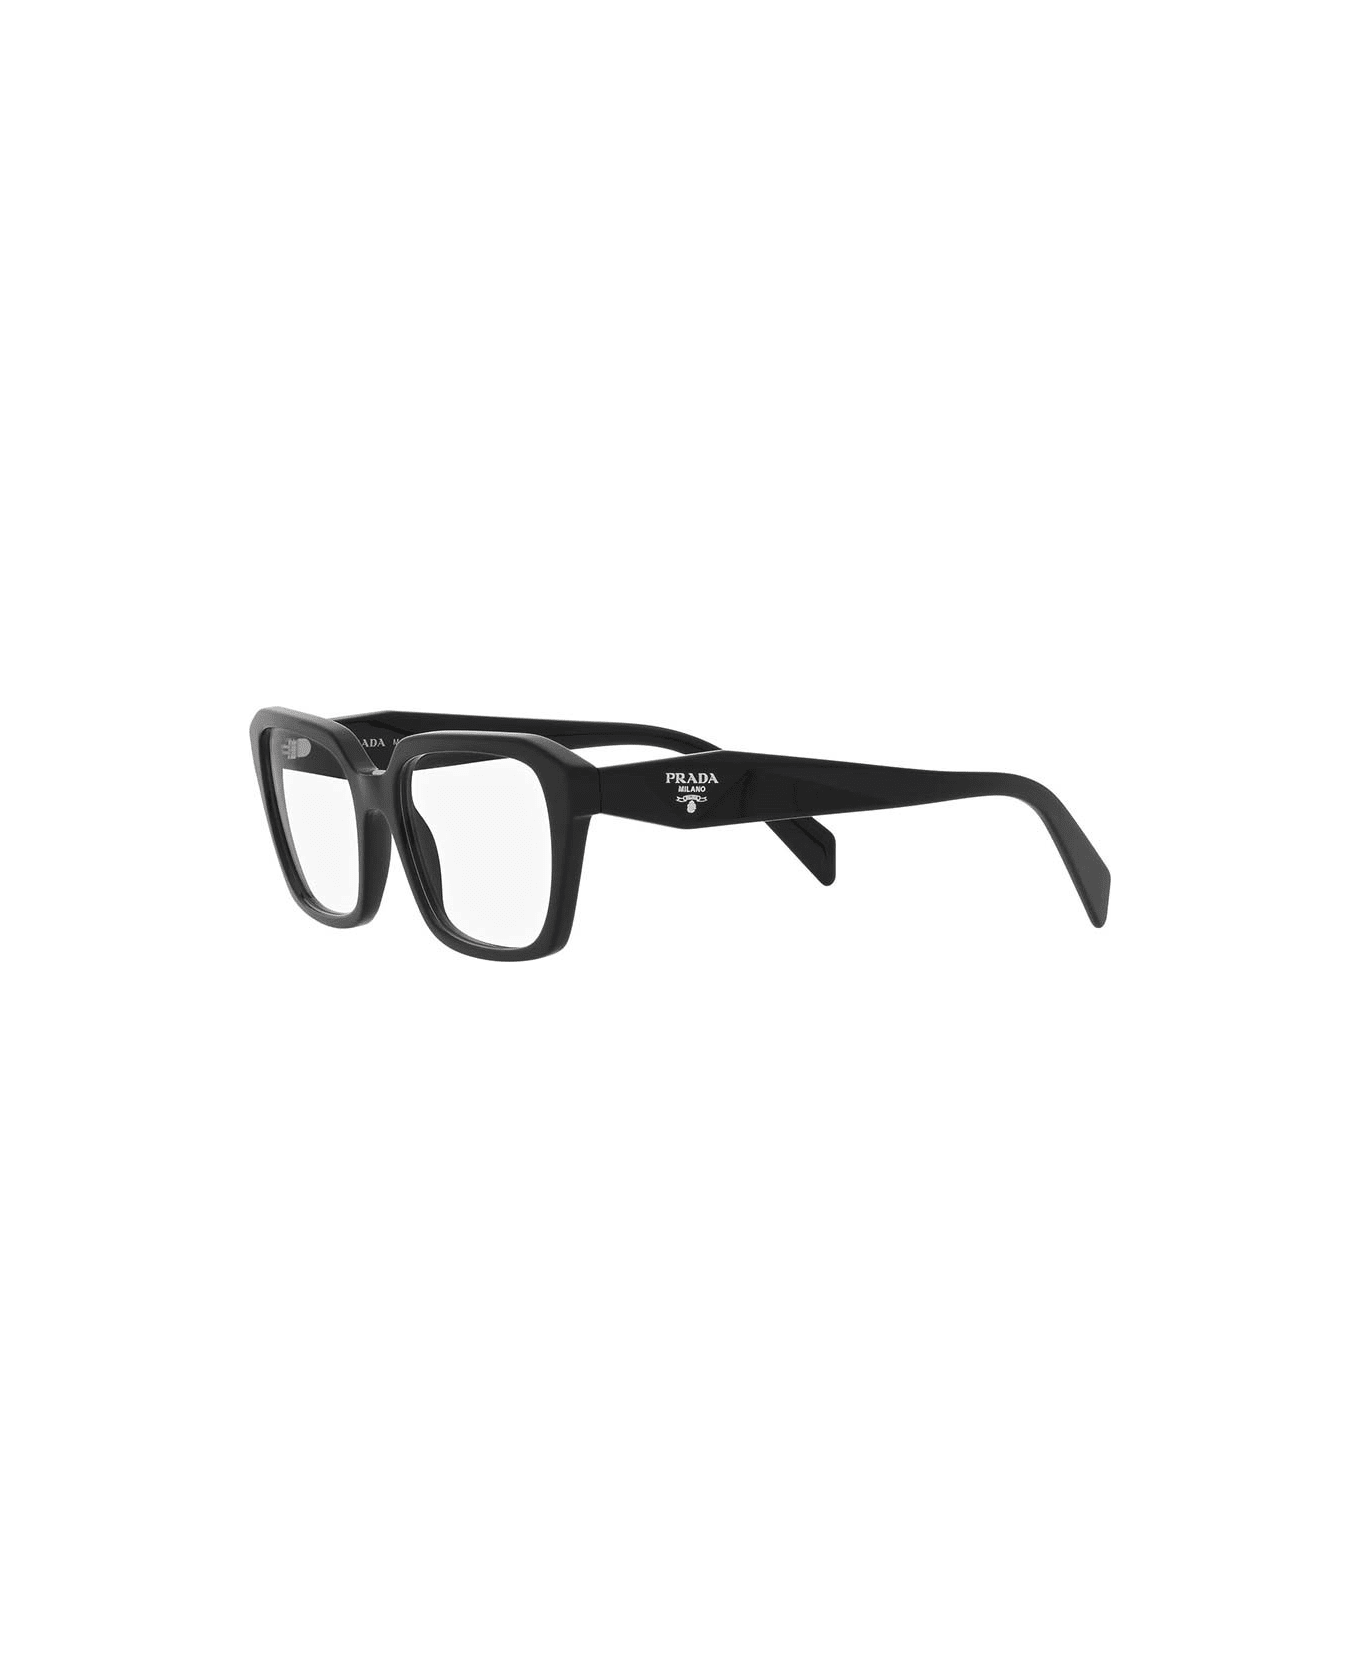 Prada Eyewear Glasses - 1AB1O1